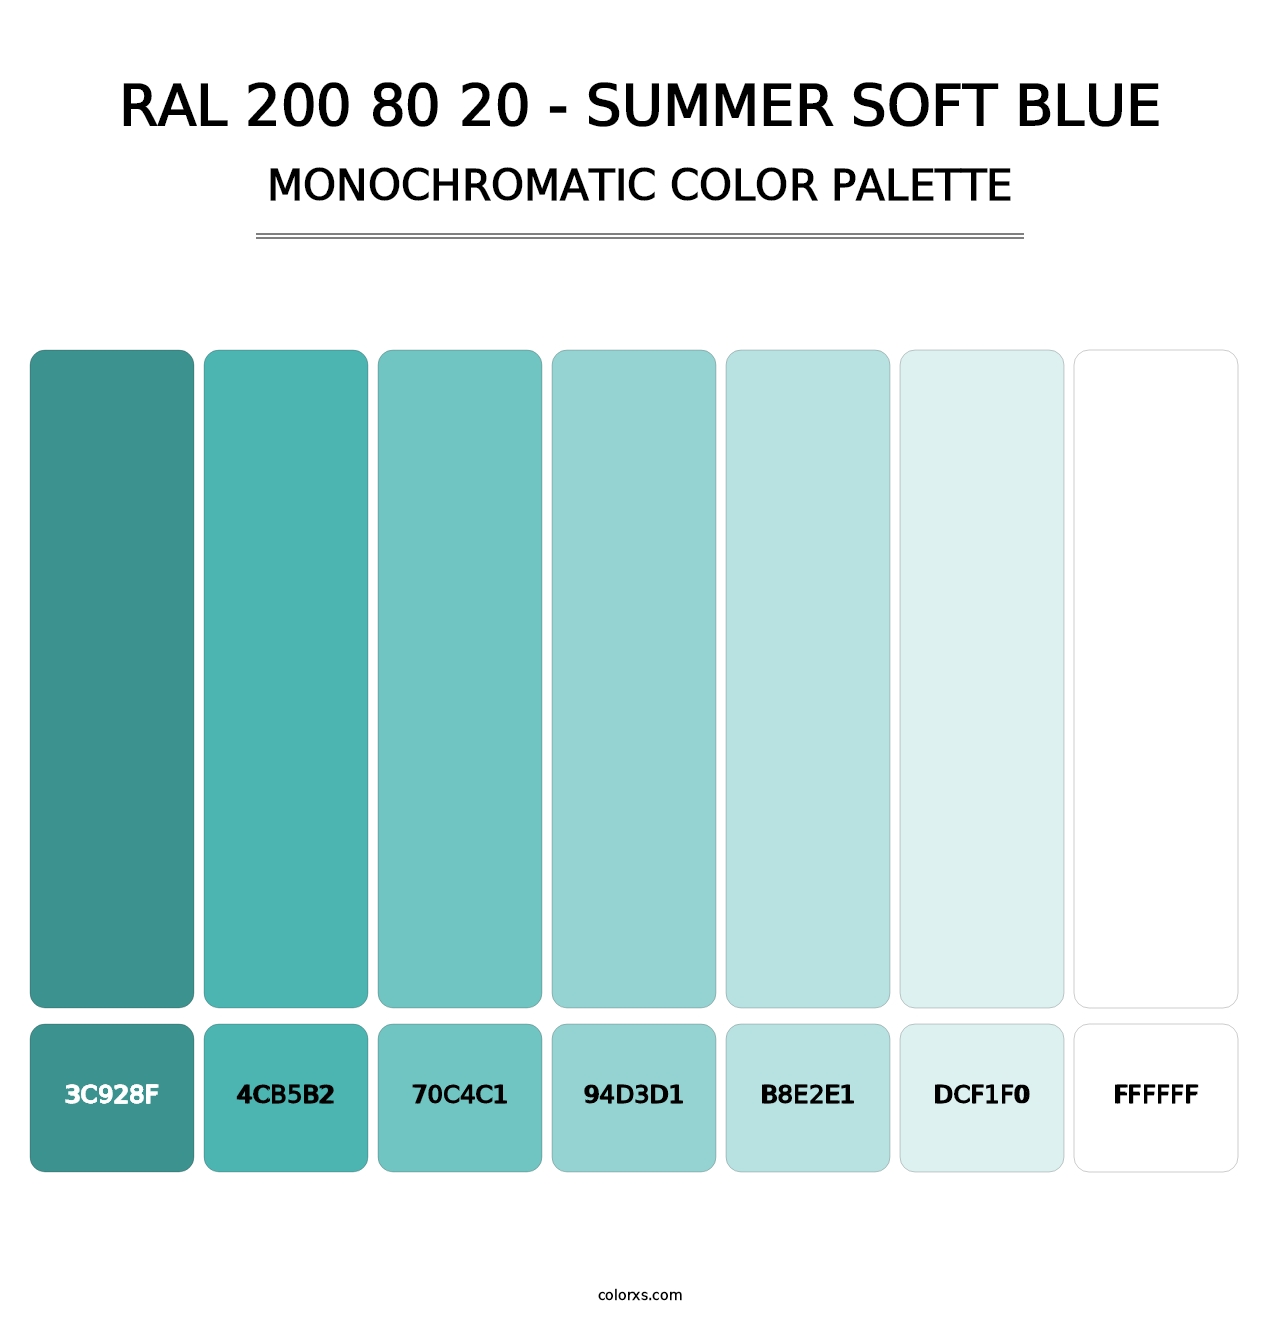 RAL 200 80 20 - Summer Soft Blue - Monochromatic Color Palette